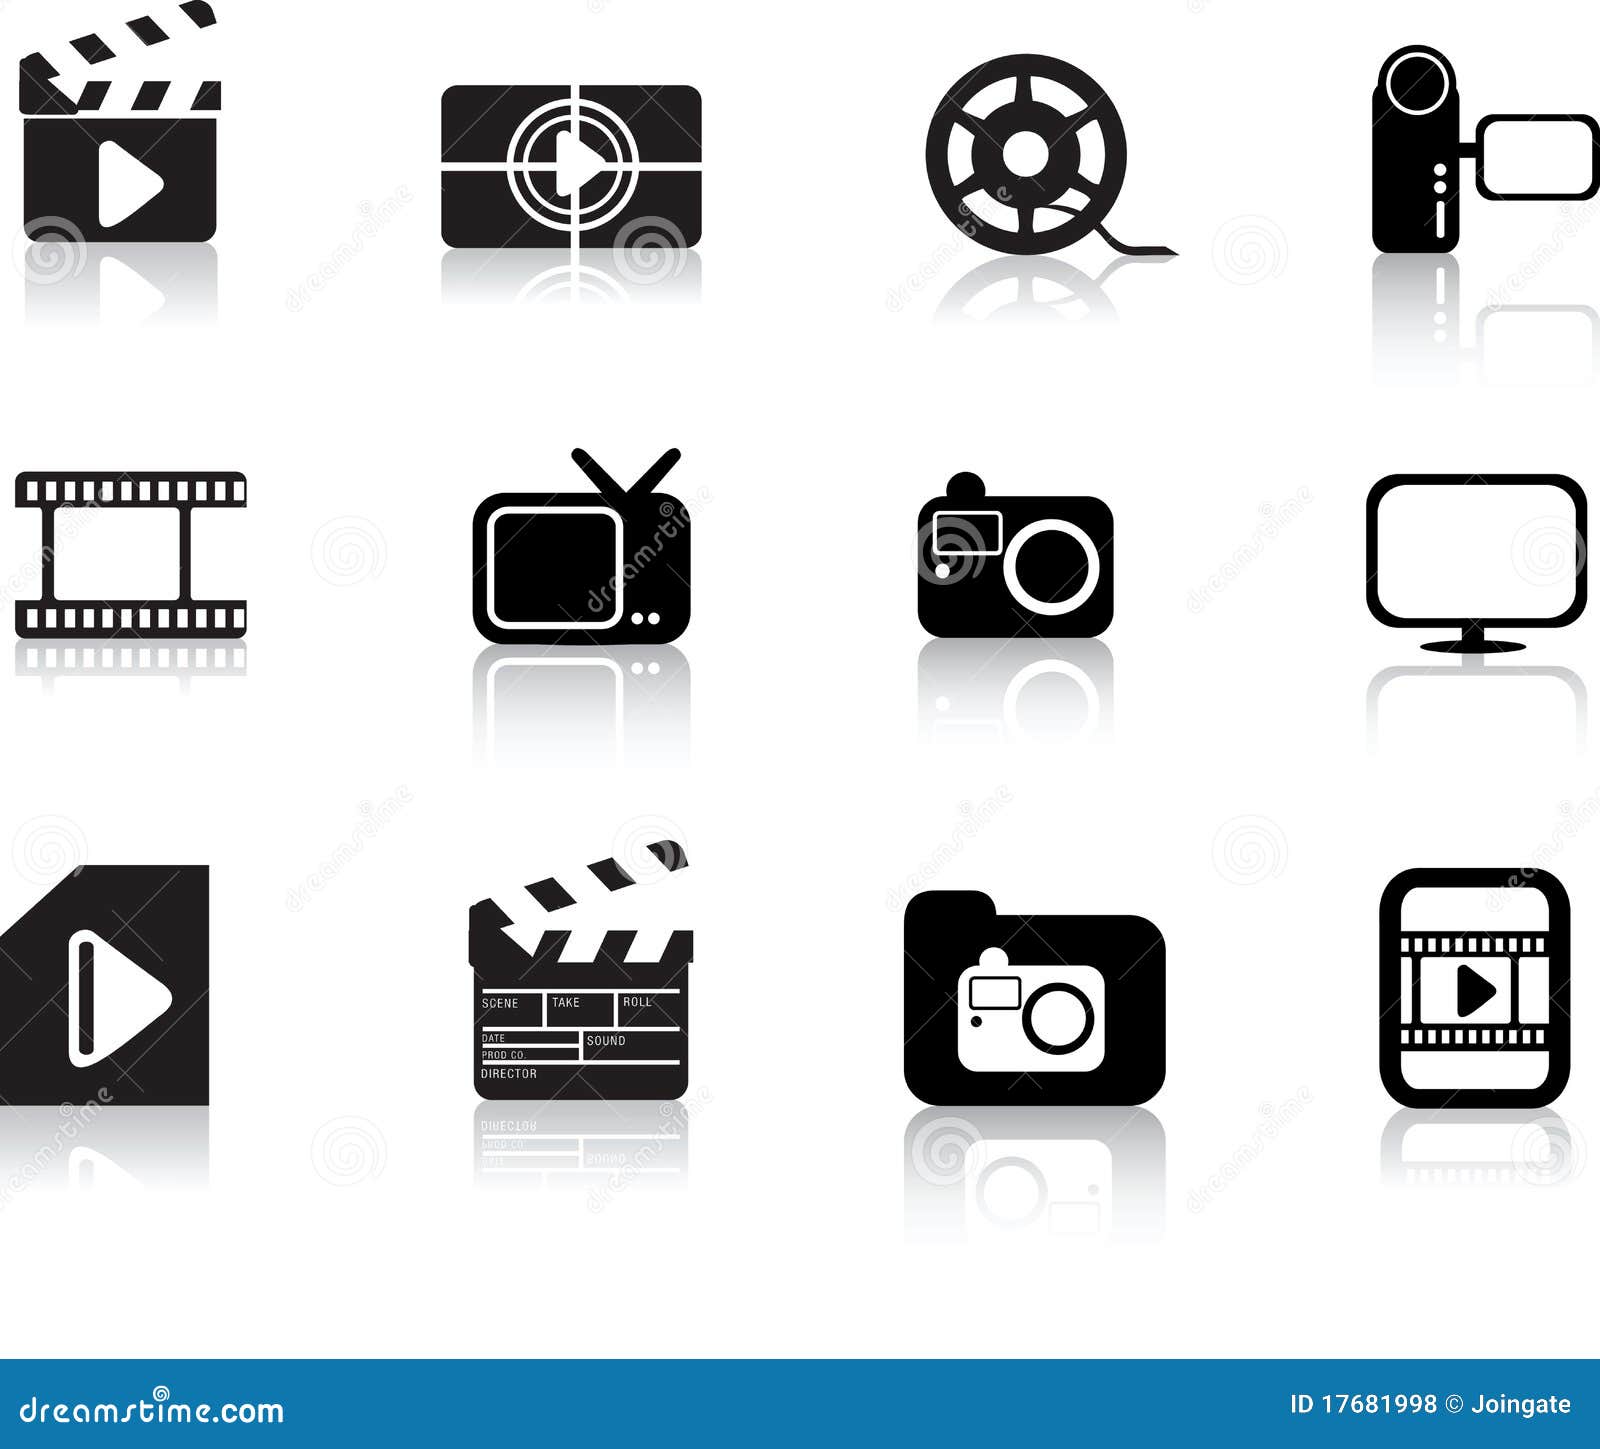 photo and multimedia icon set